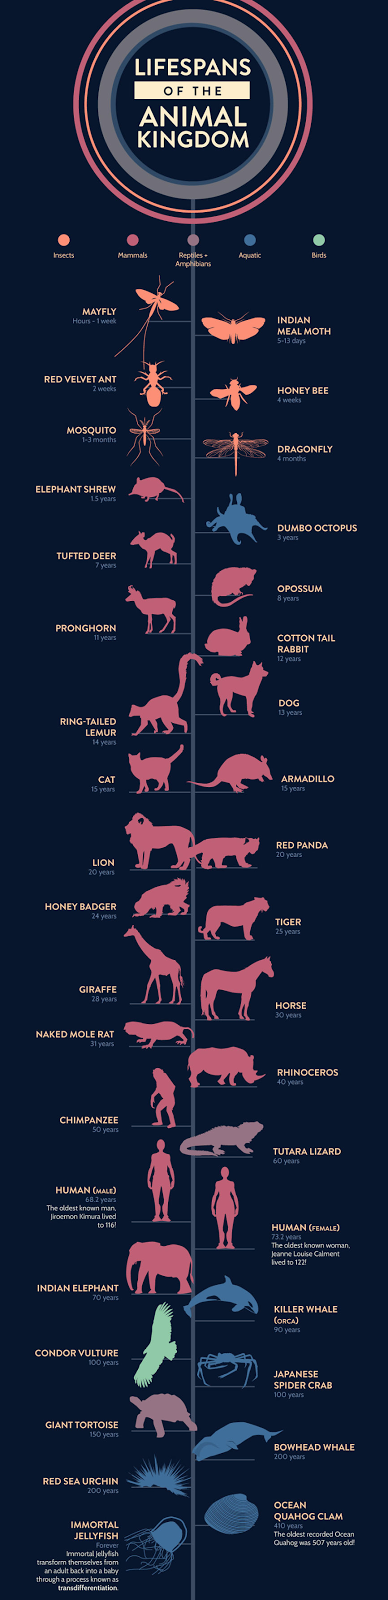 Lifespans of the animal kingdom